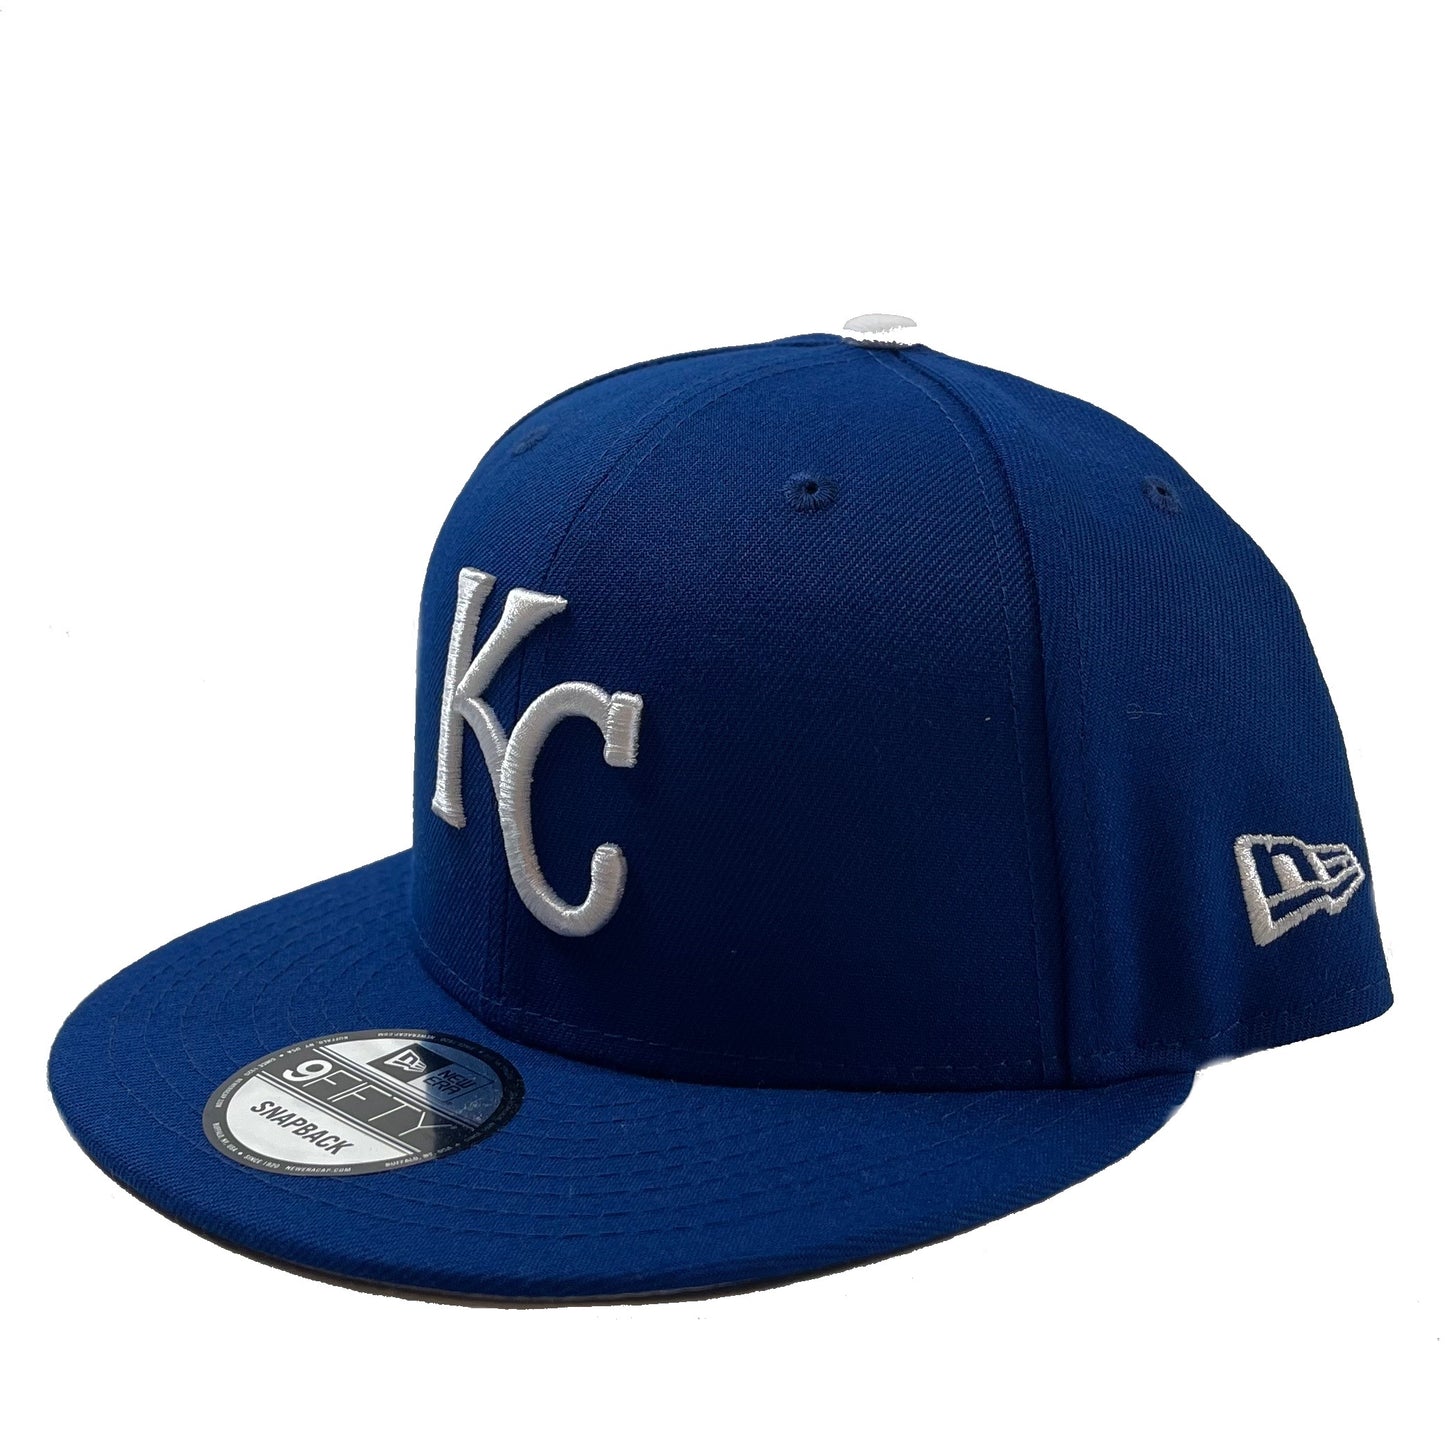 Kansas City Royals (Royal Blue) Fitted